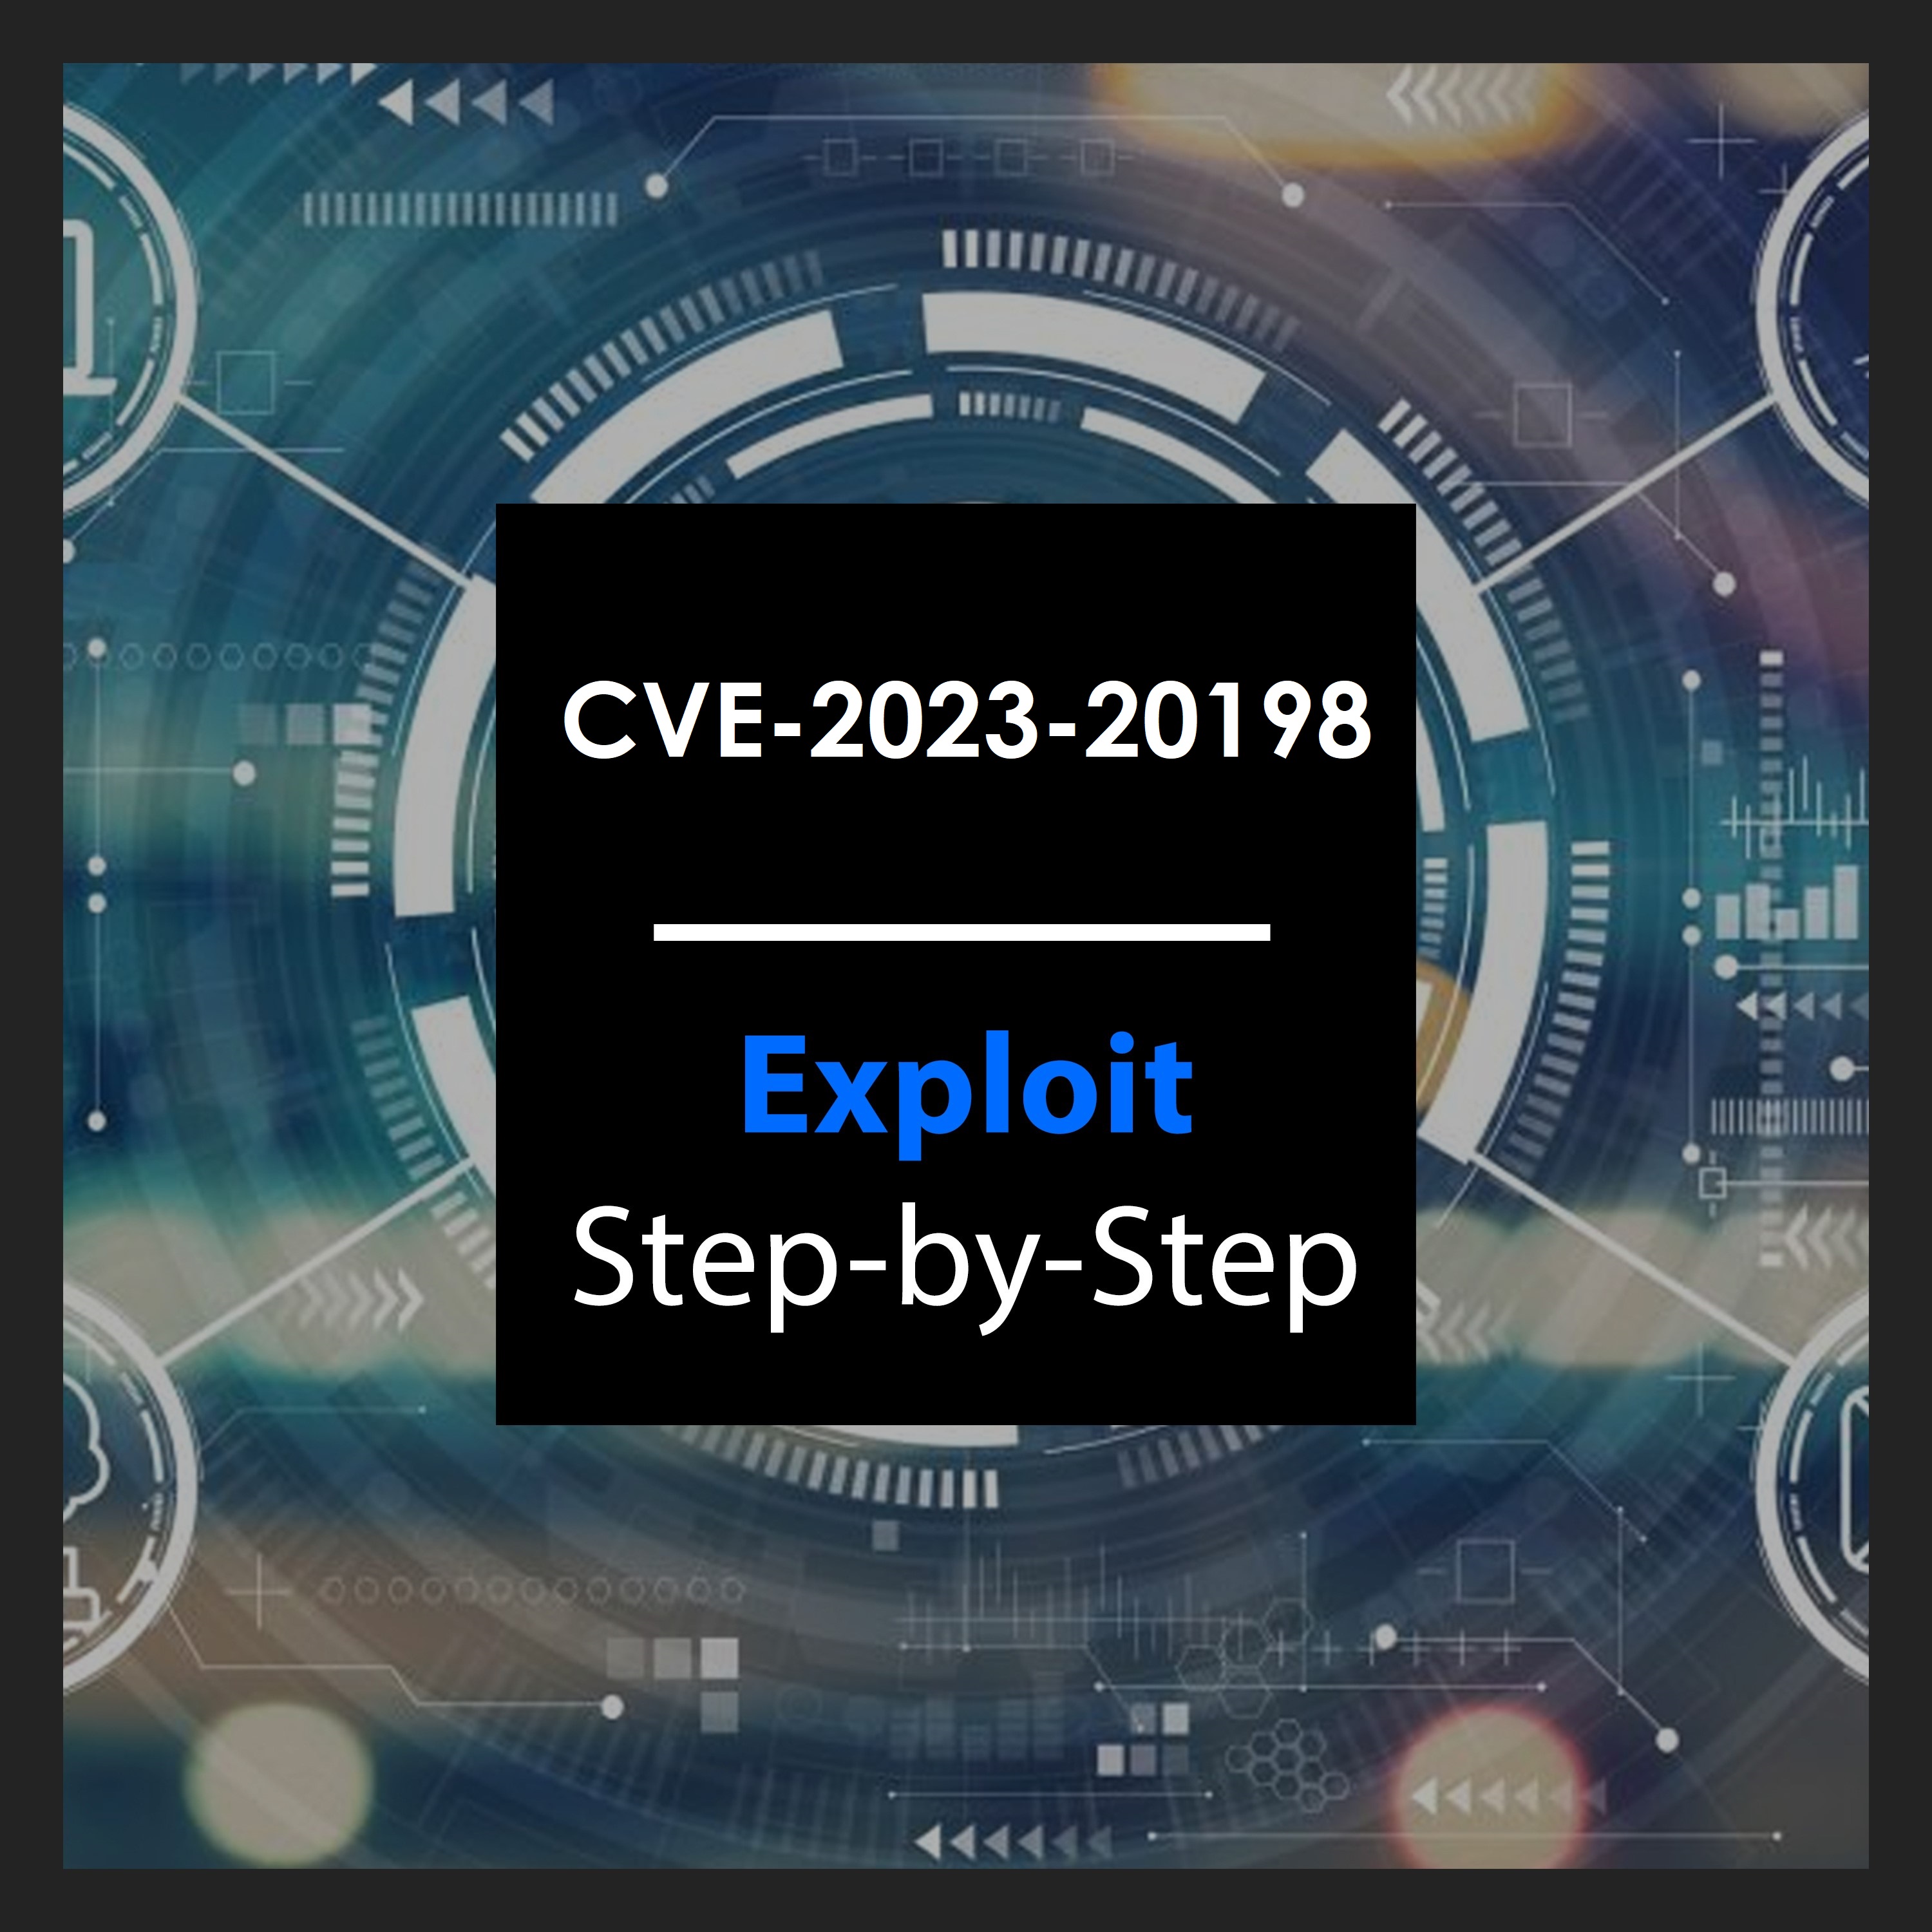 CVE-2023-20198: The menace of a security device